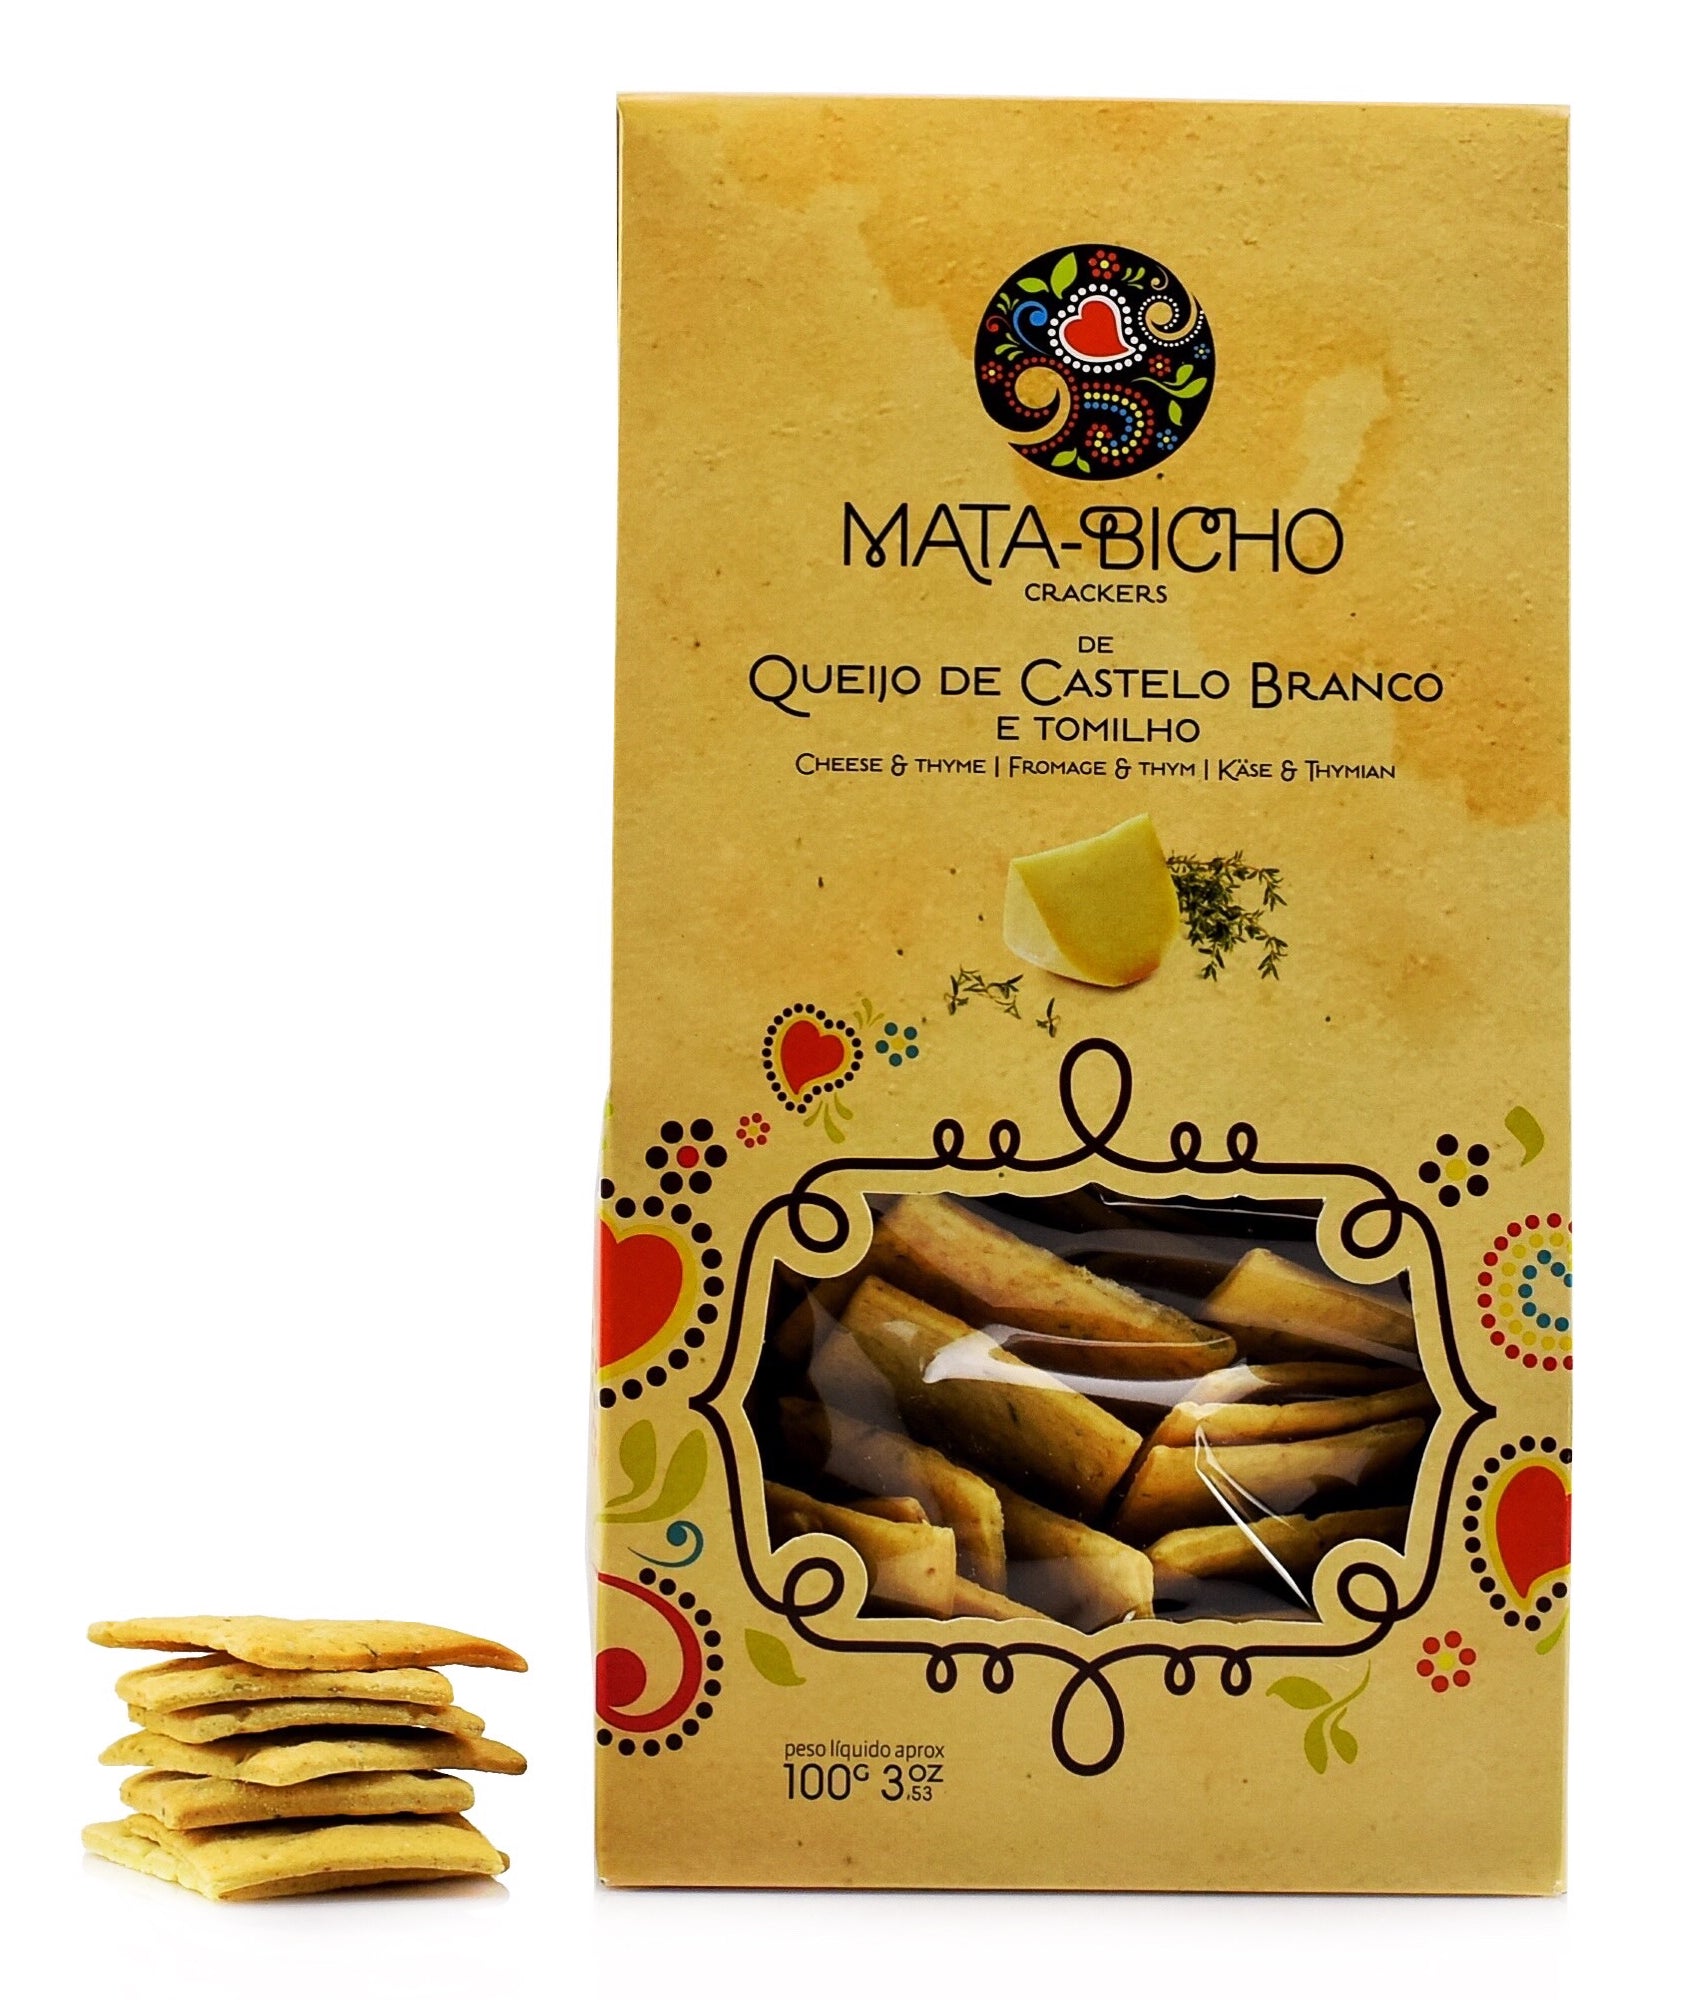 Crackers de Queijo Castelo Branco e Tomilho Mata-Bicho